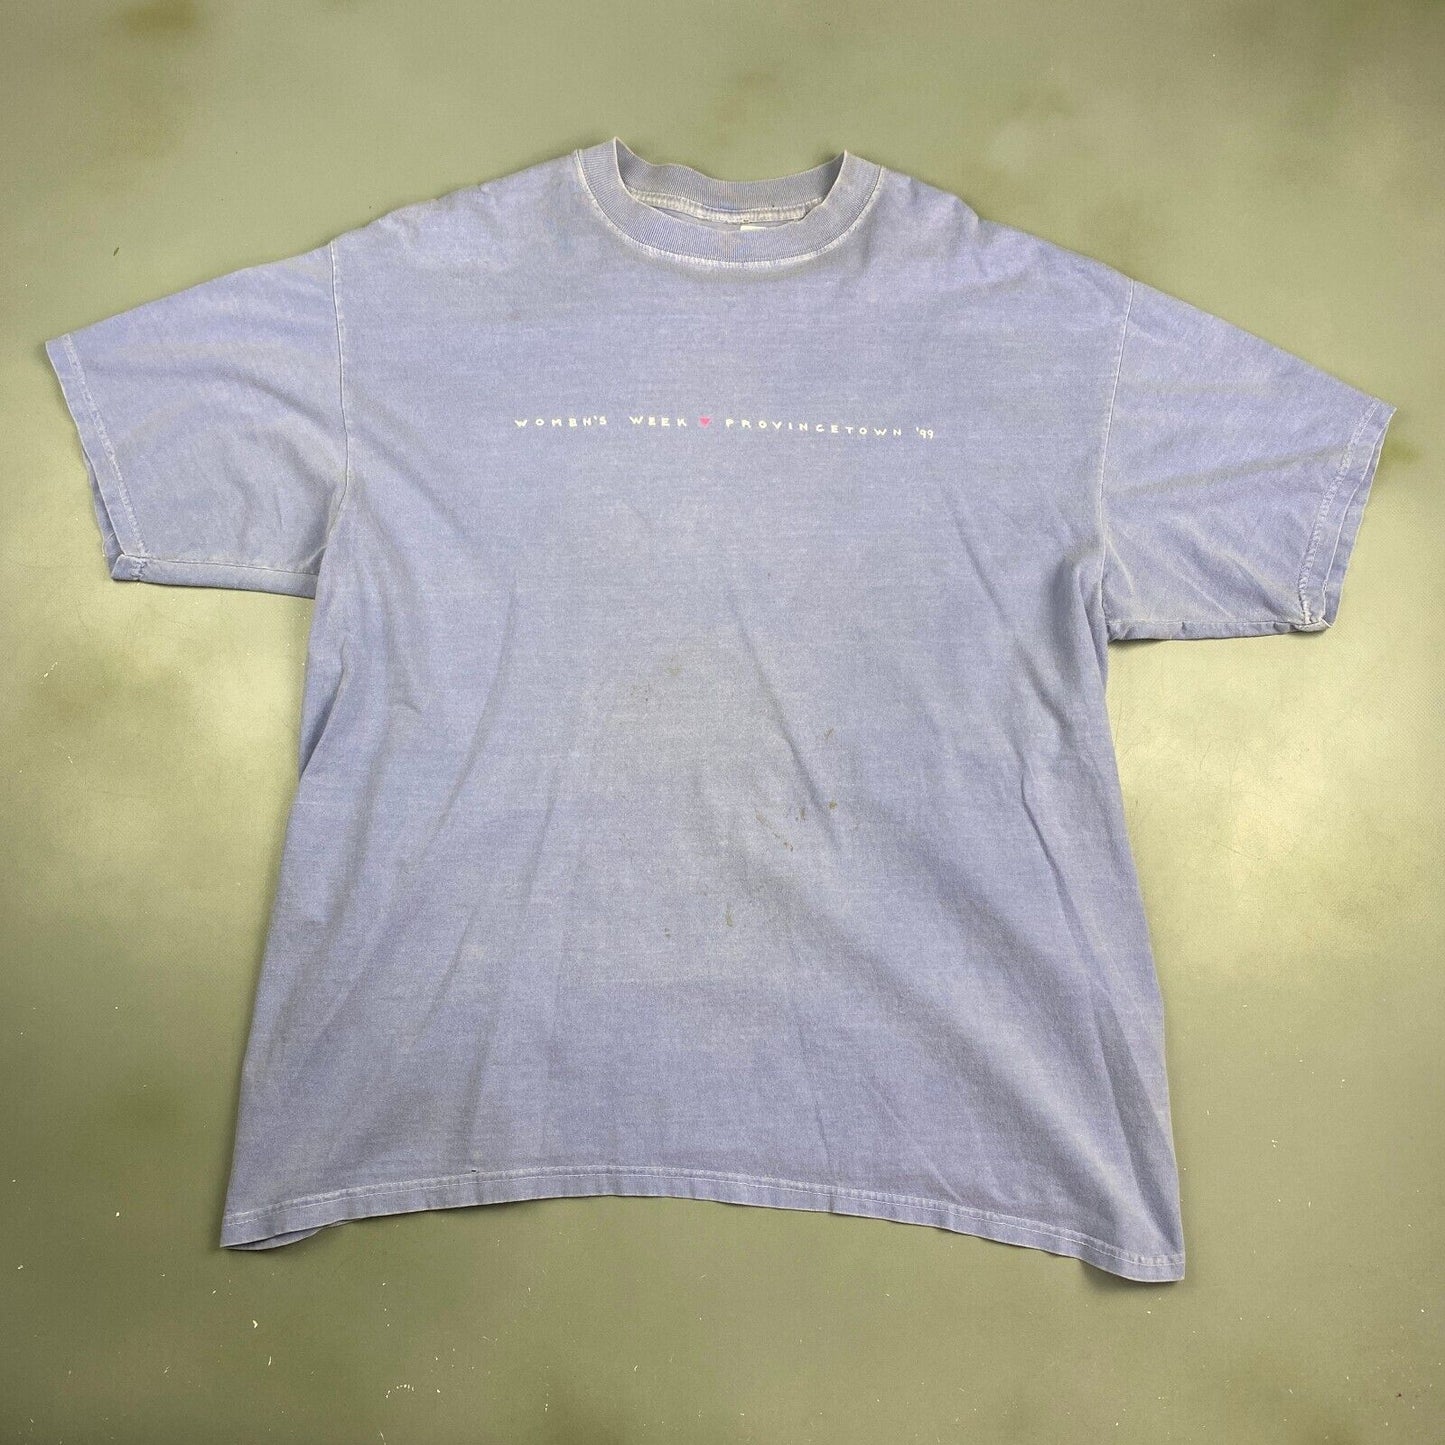 Vintage 90s Womens Week Faded Blue T-Shirt sz XL Men Adult